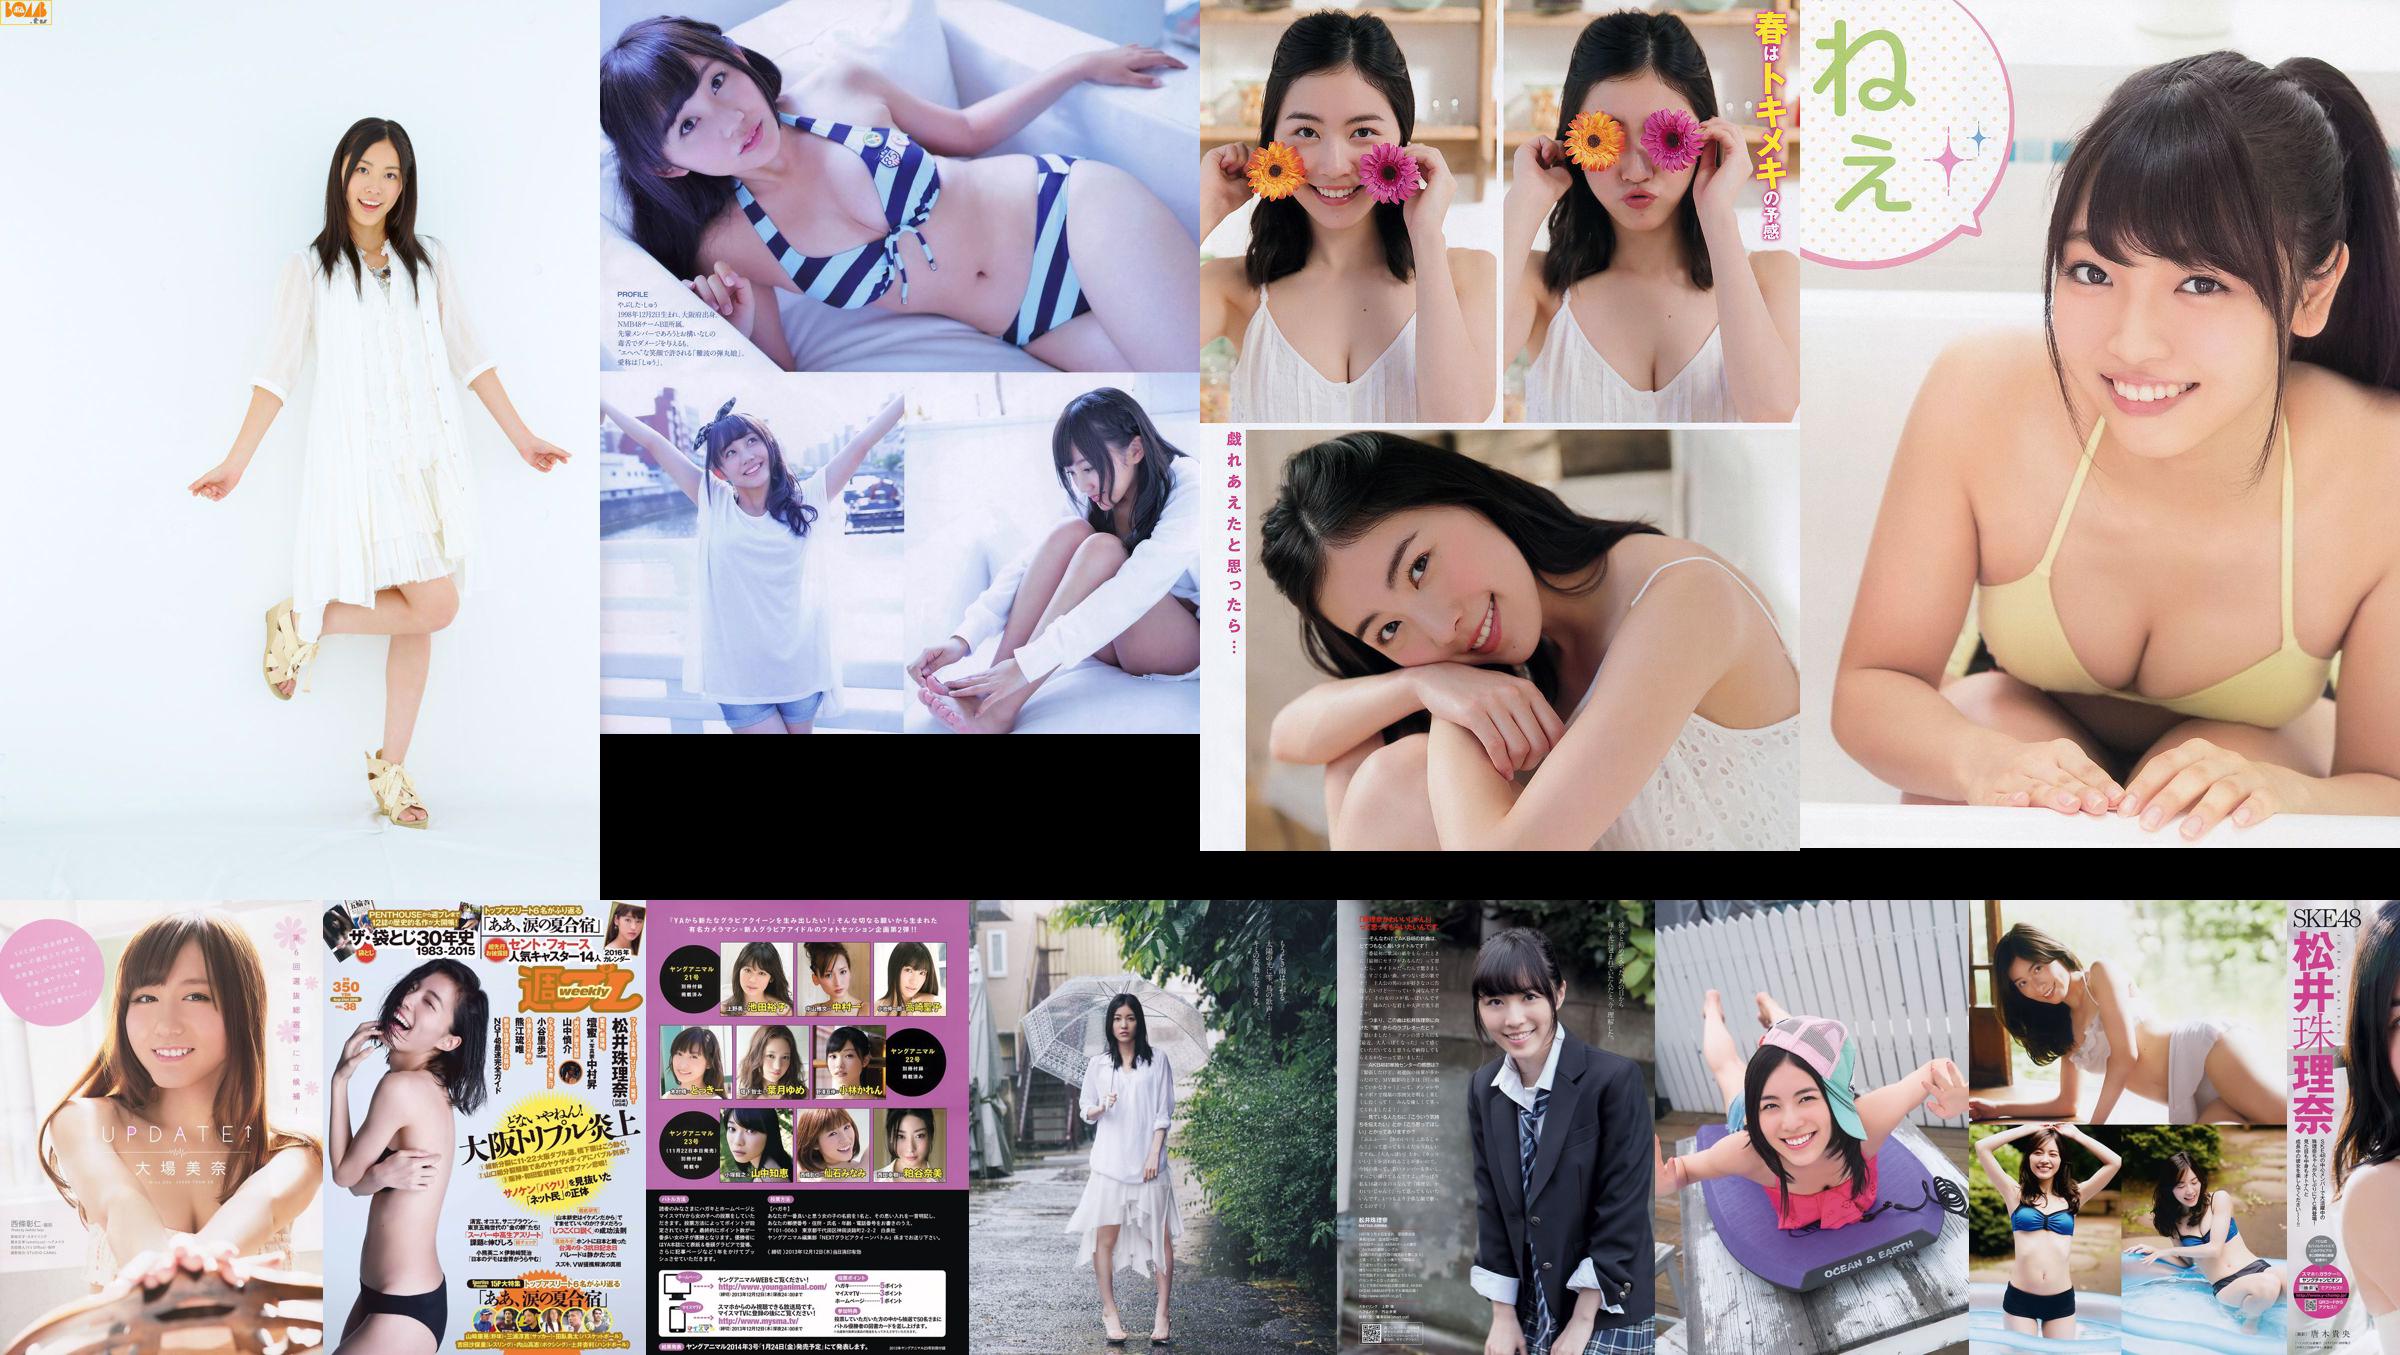 [Bomb Magazine] 2014 N ° 07 Matsui Jurina Watanabe Miyuki Koshima Mako Iriyama Princesse Sato Magazine photo No.7777b9 Page 1